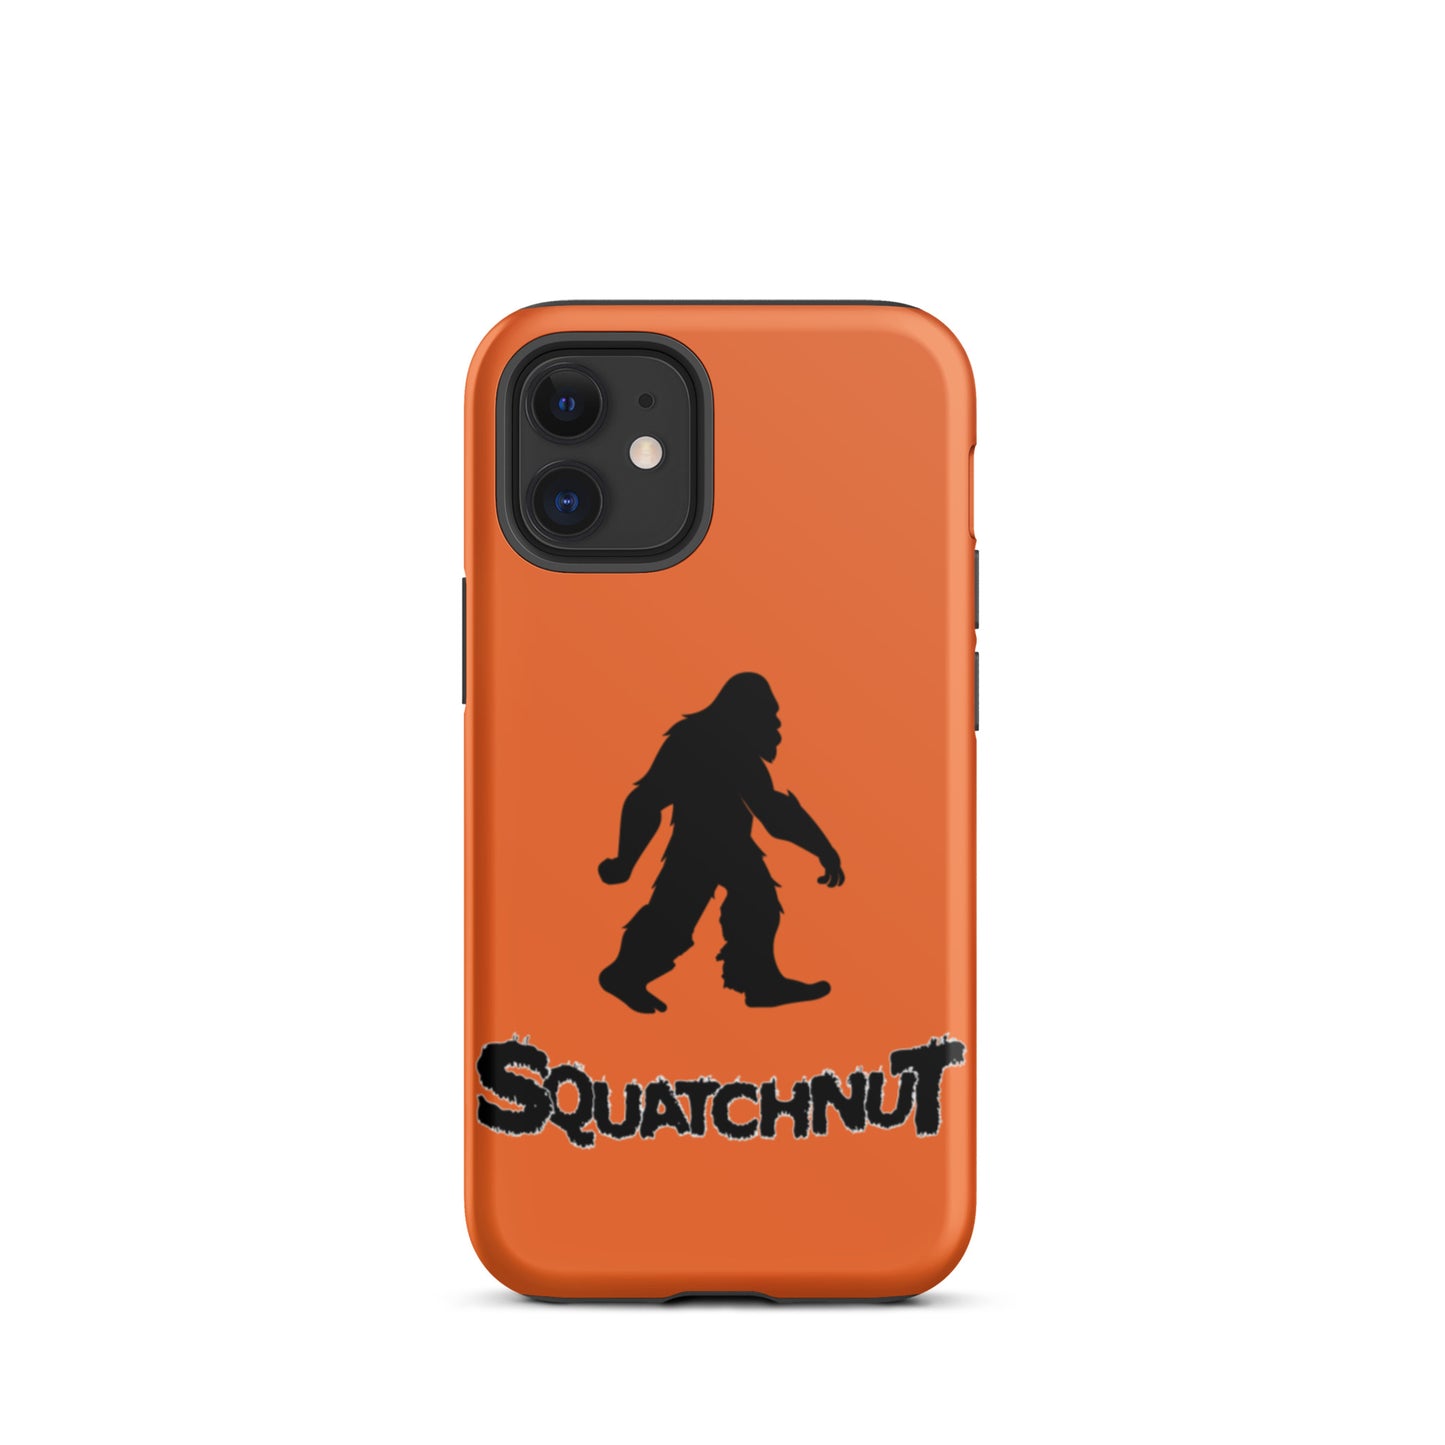 iPhone Squatchnut Tough iPhone case